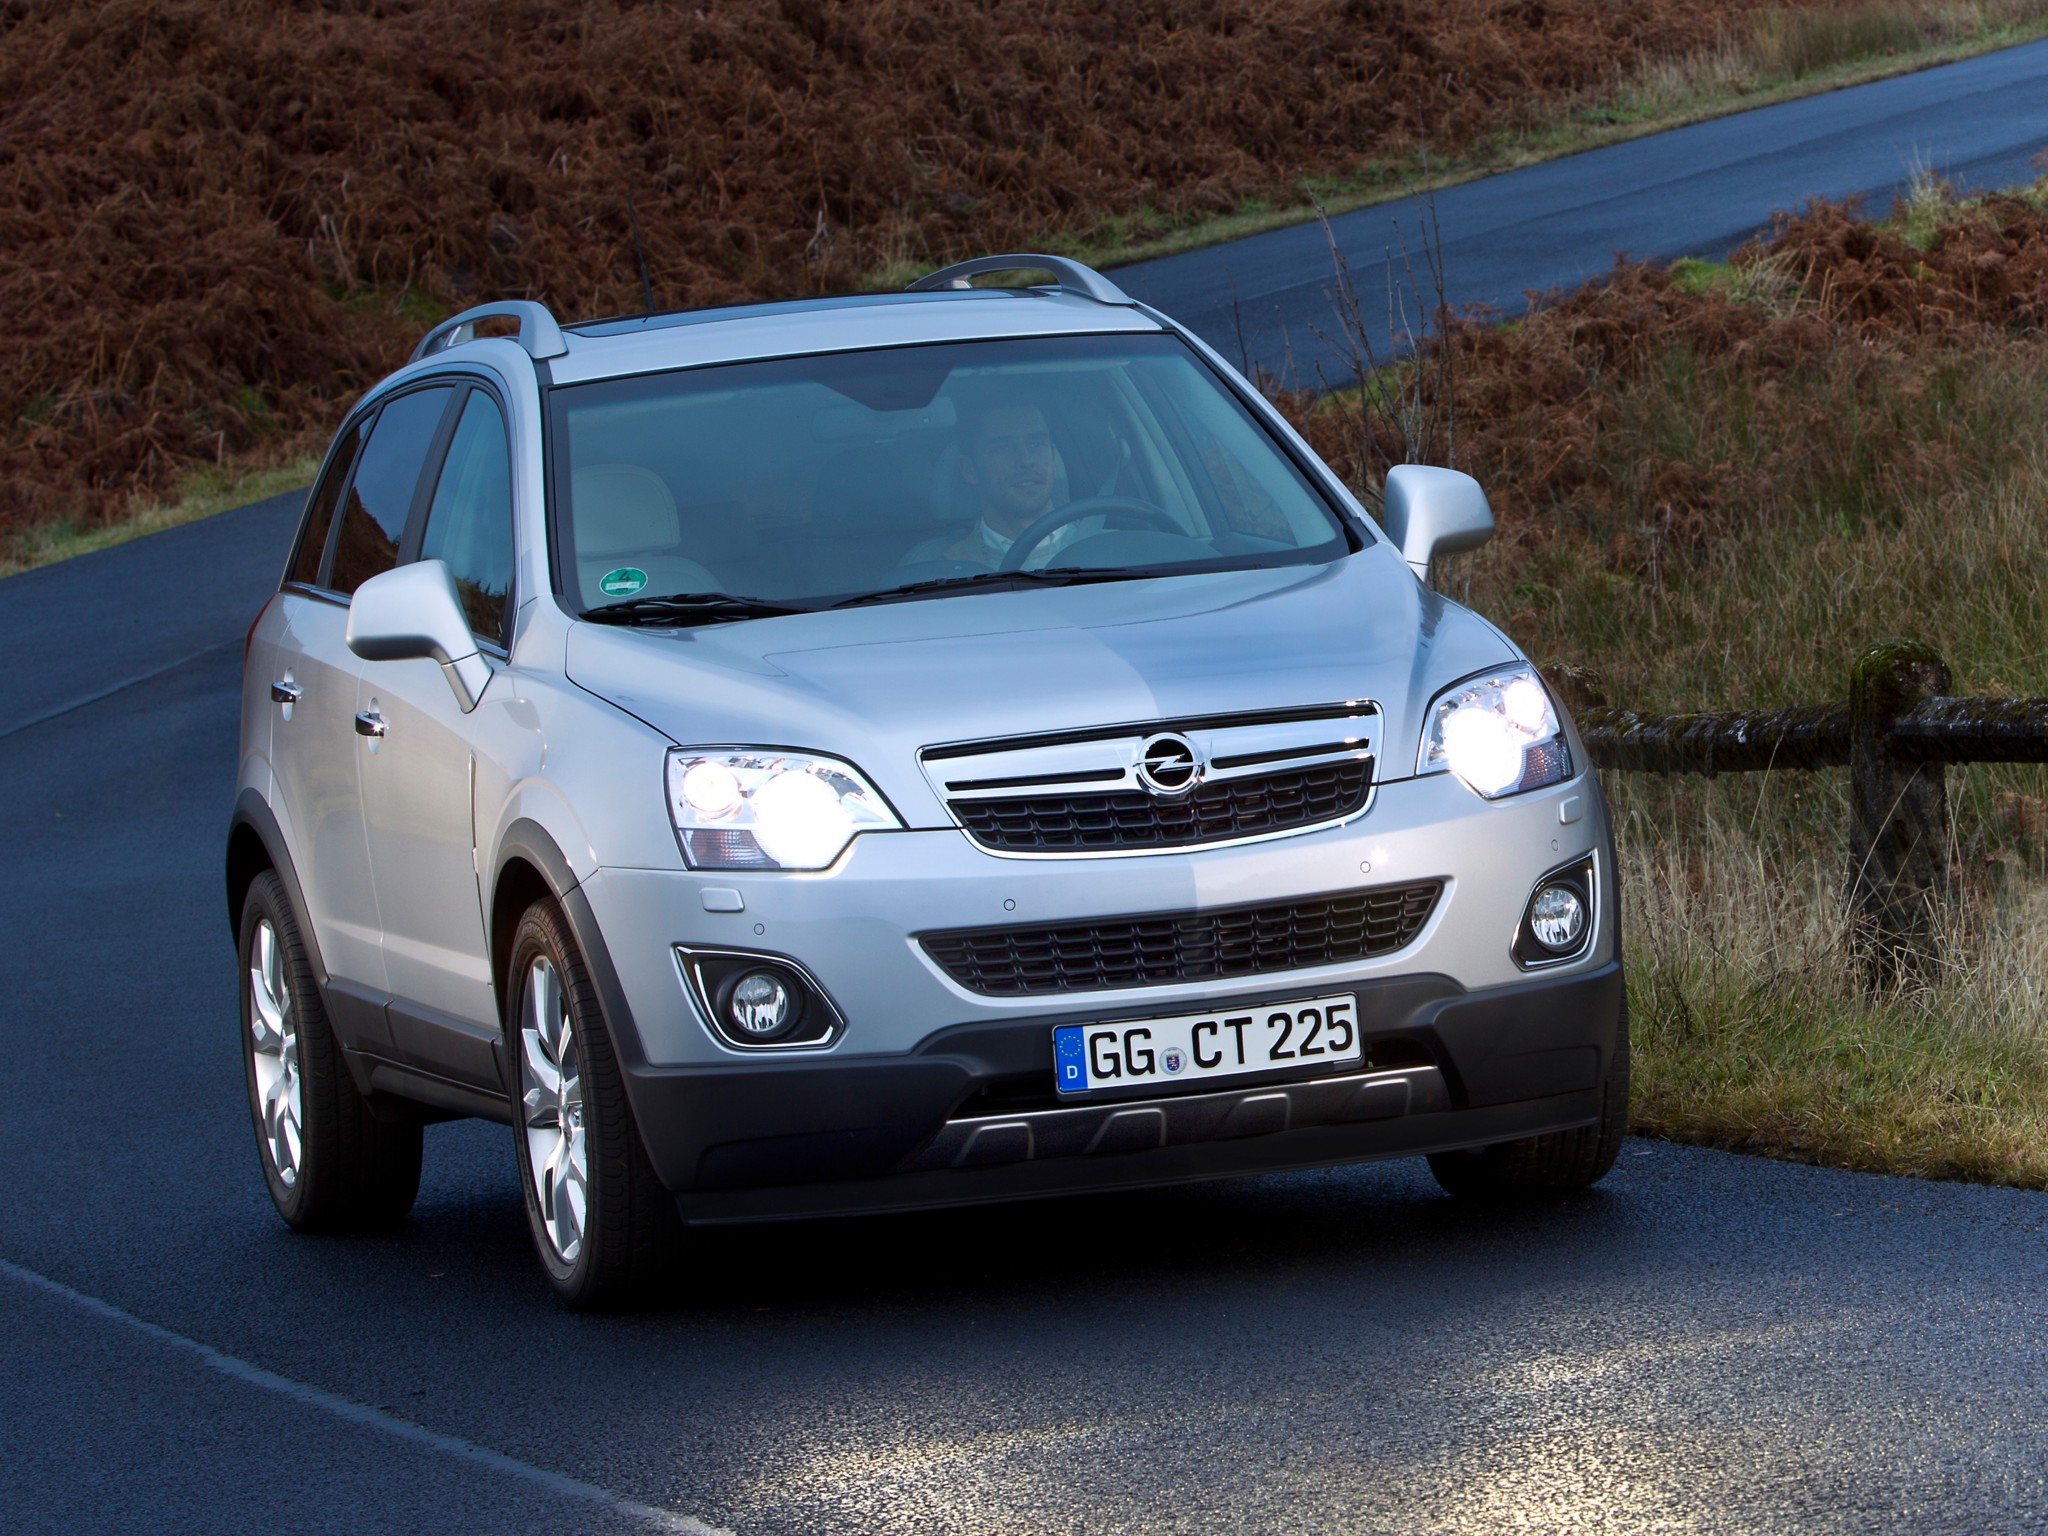 Opel antara купить. Opel Antara 2.4. Opel кроссовер Antara. Опель Антара в6. Орел Онтара.